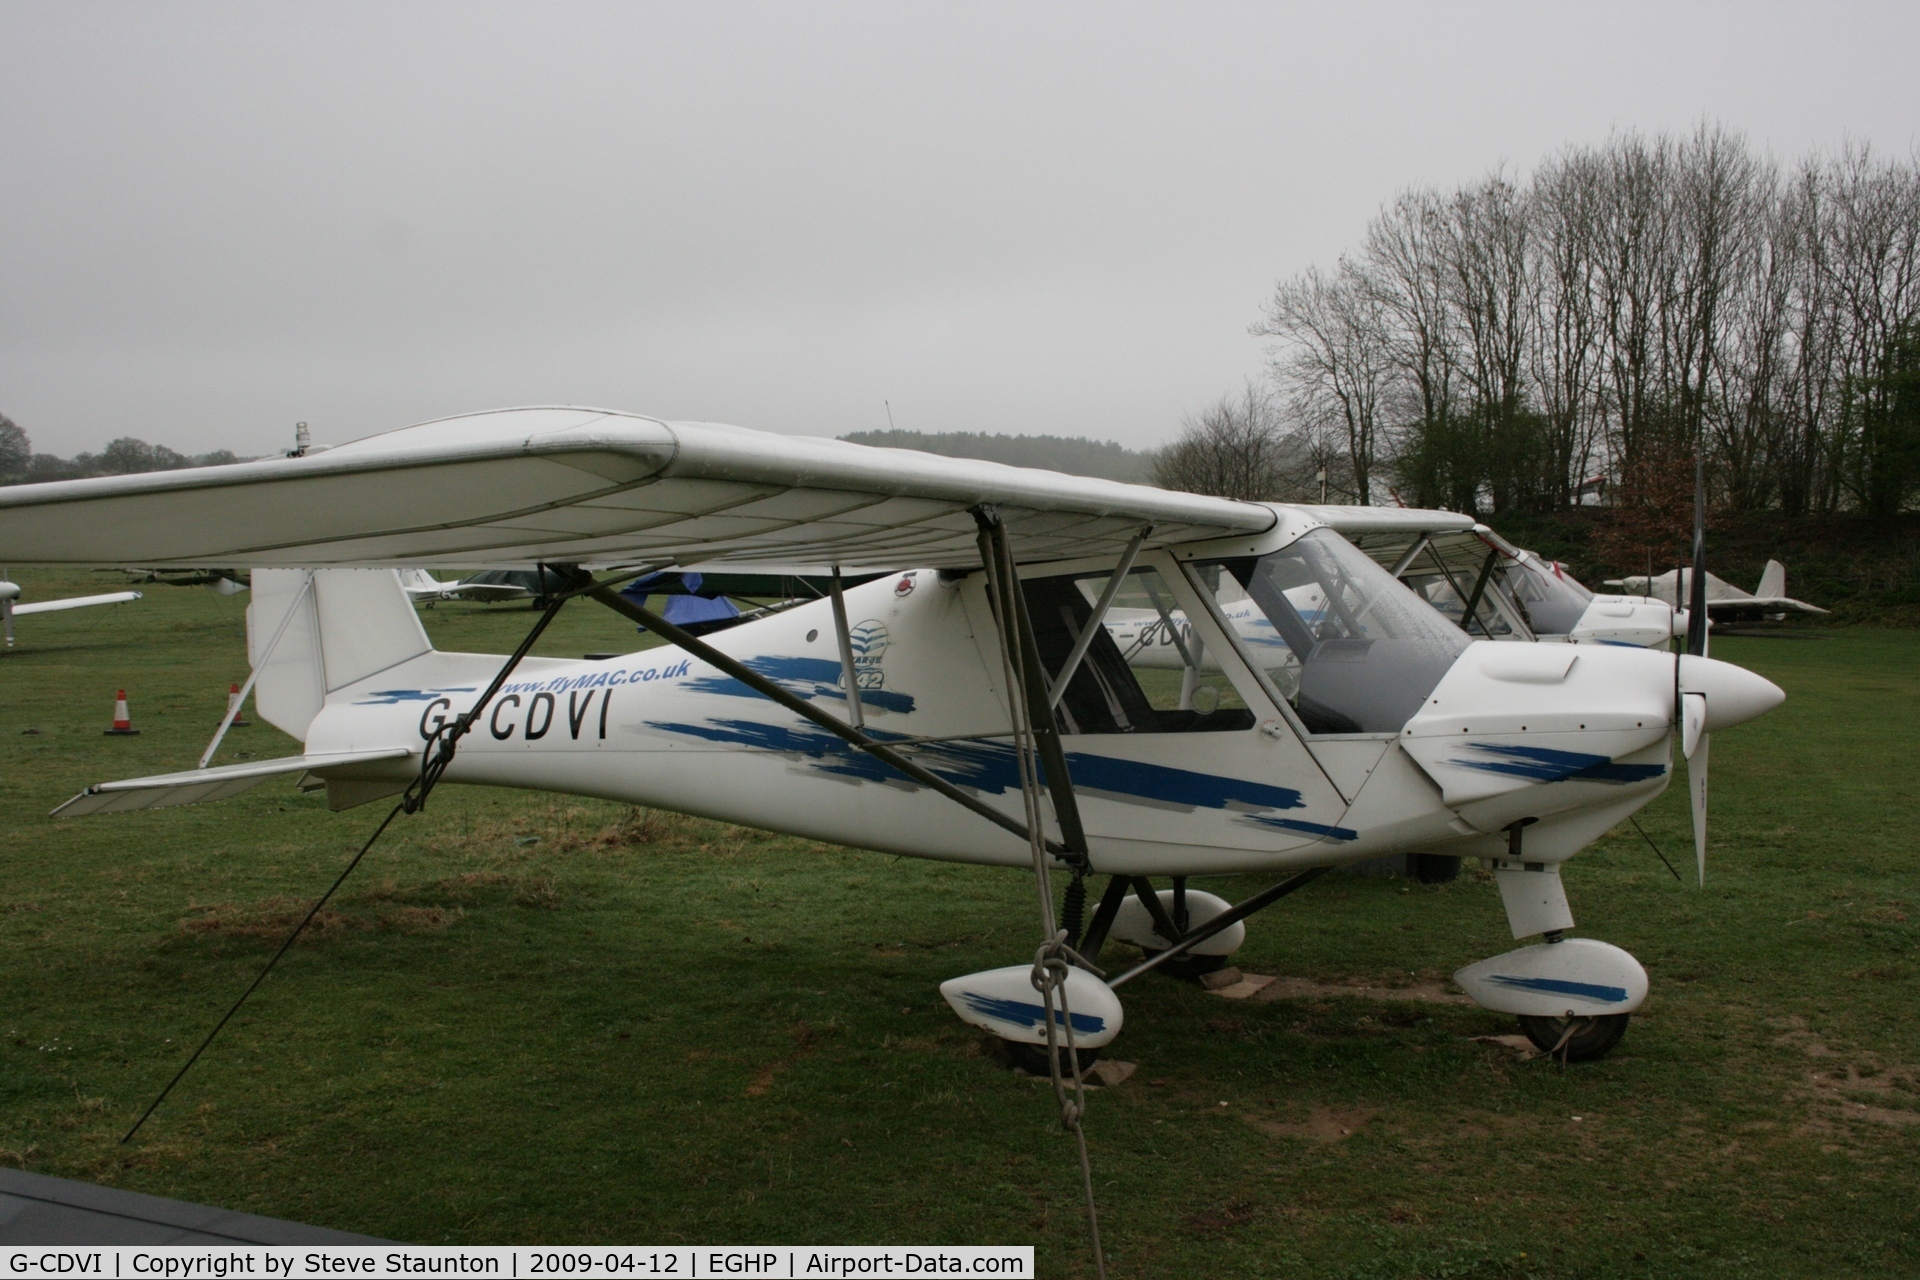 G-CDVI, 2006 Comco Ikarus C42 FB80 C/N 0602-6794, Taken at Popham Airfield, England on a gloomy April Sunday (12/04/09)